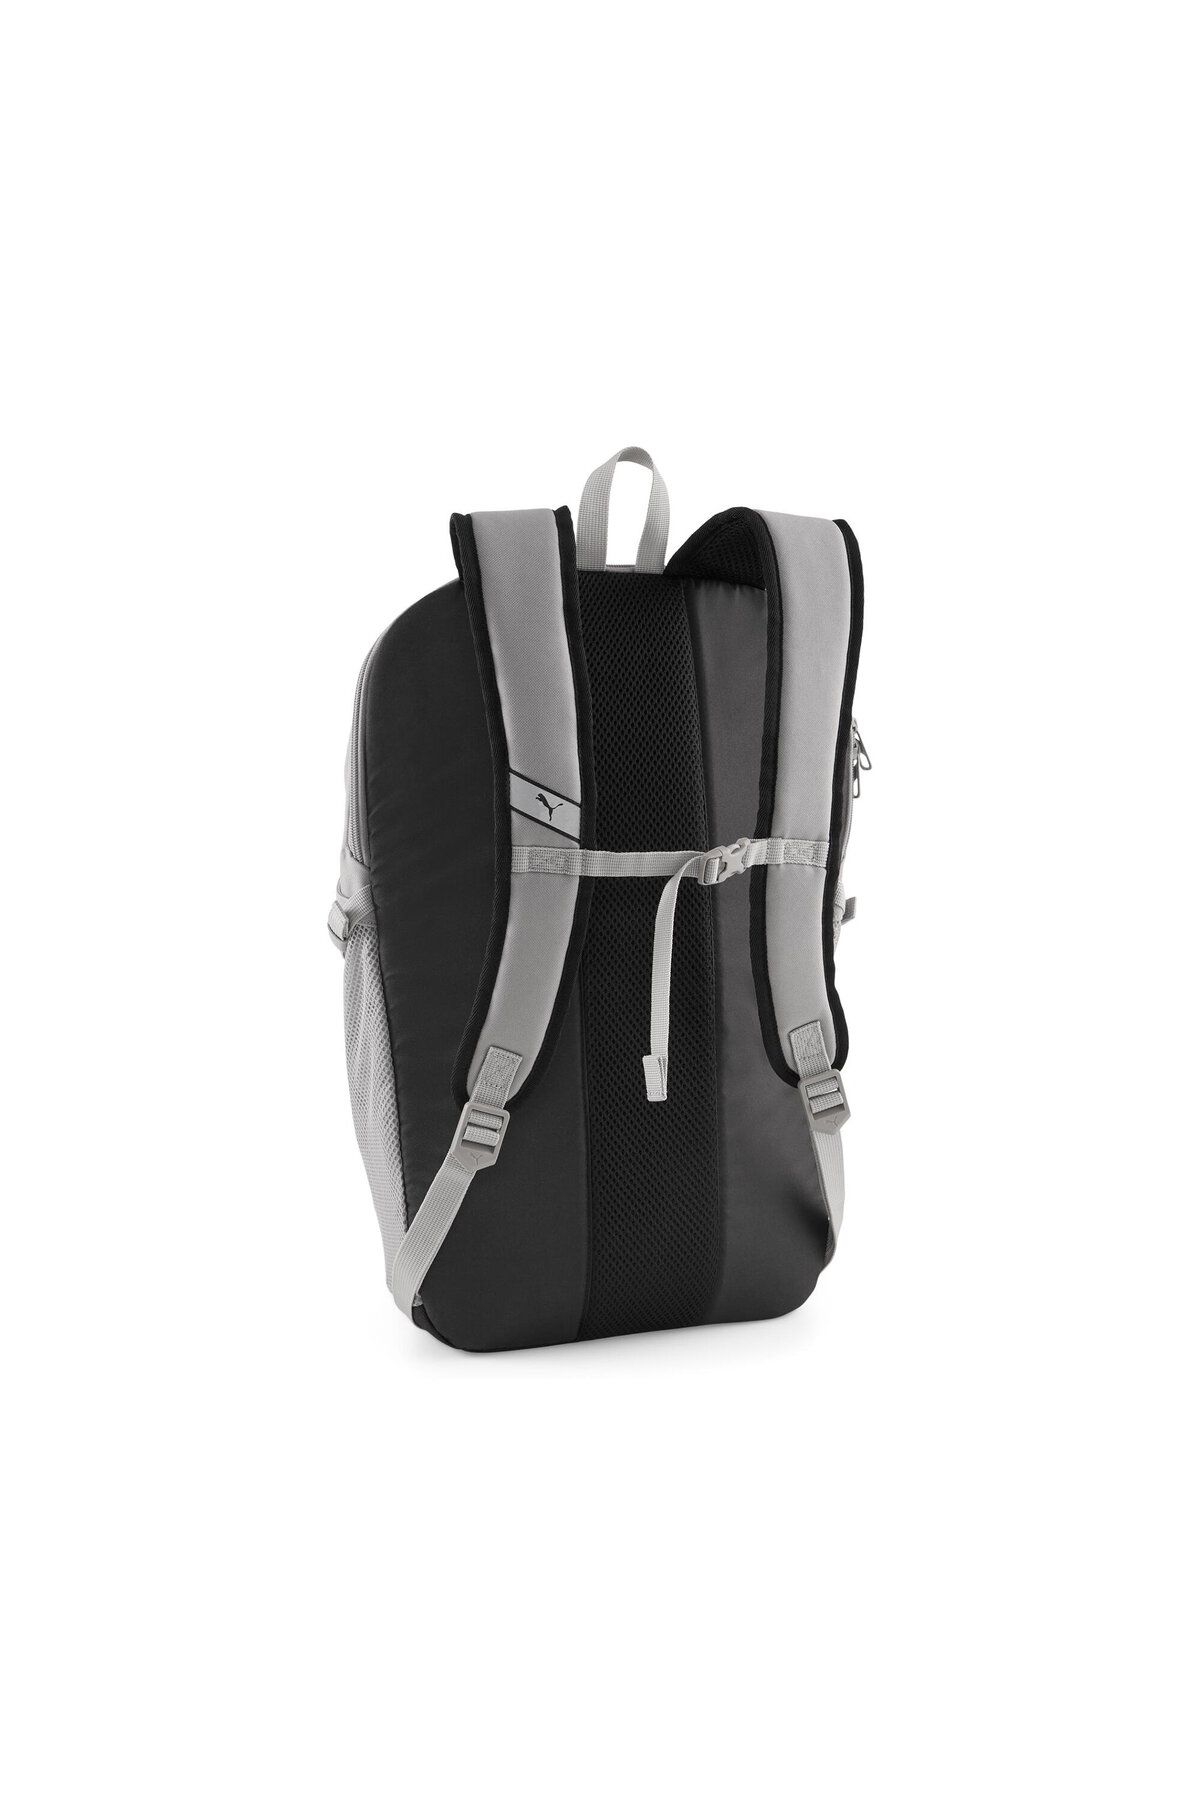 Puma Versatile Middle And Backpack Pro Trendyol - Plus Daily Sports School School Rucksack Backpack School High